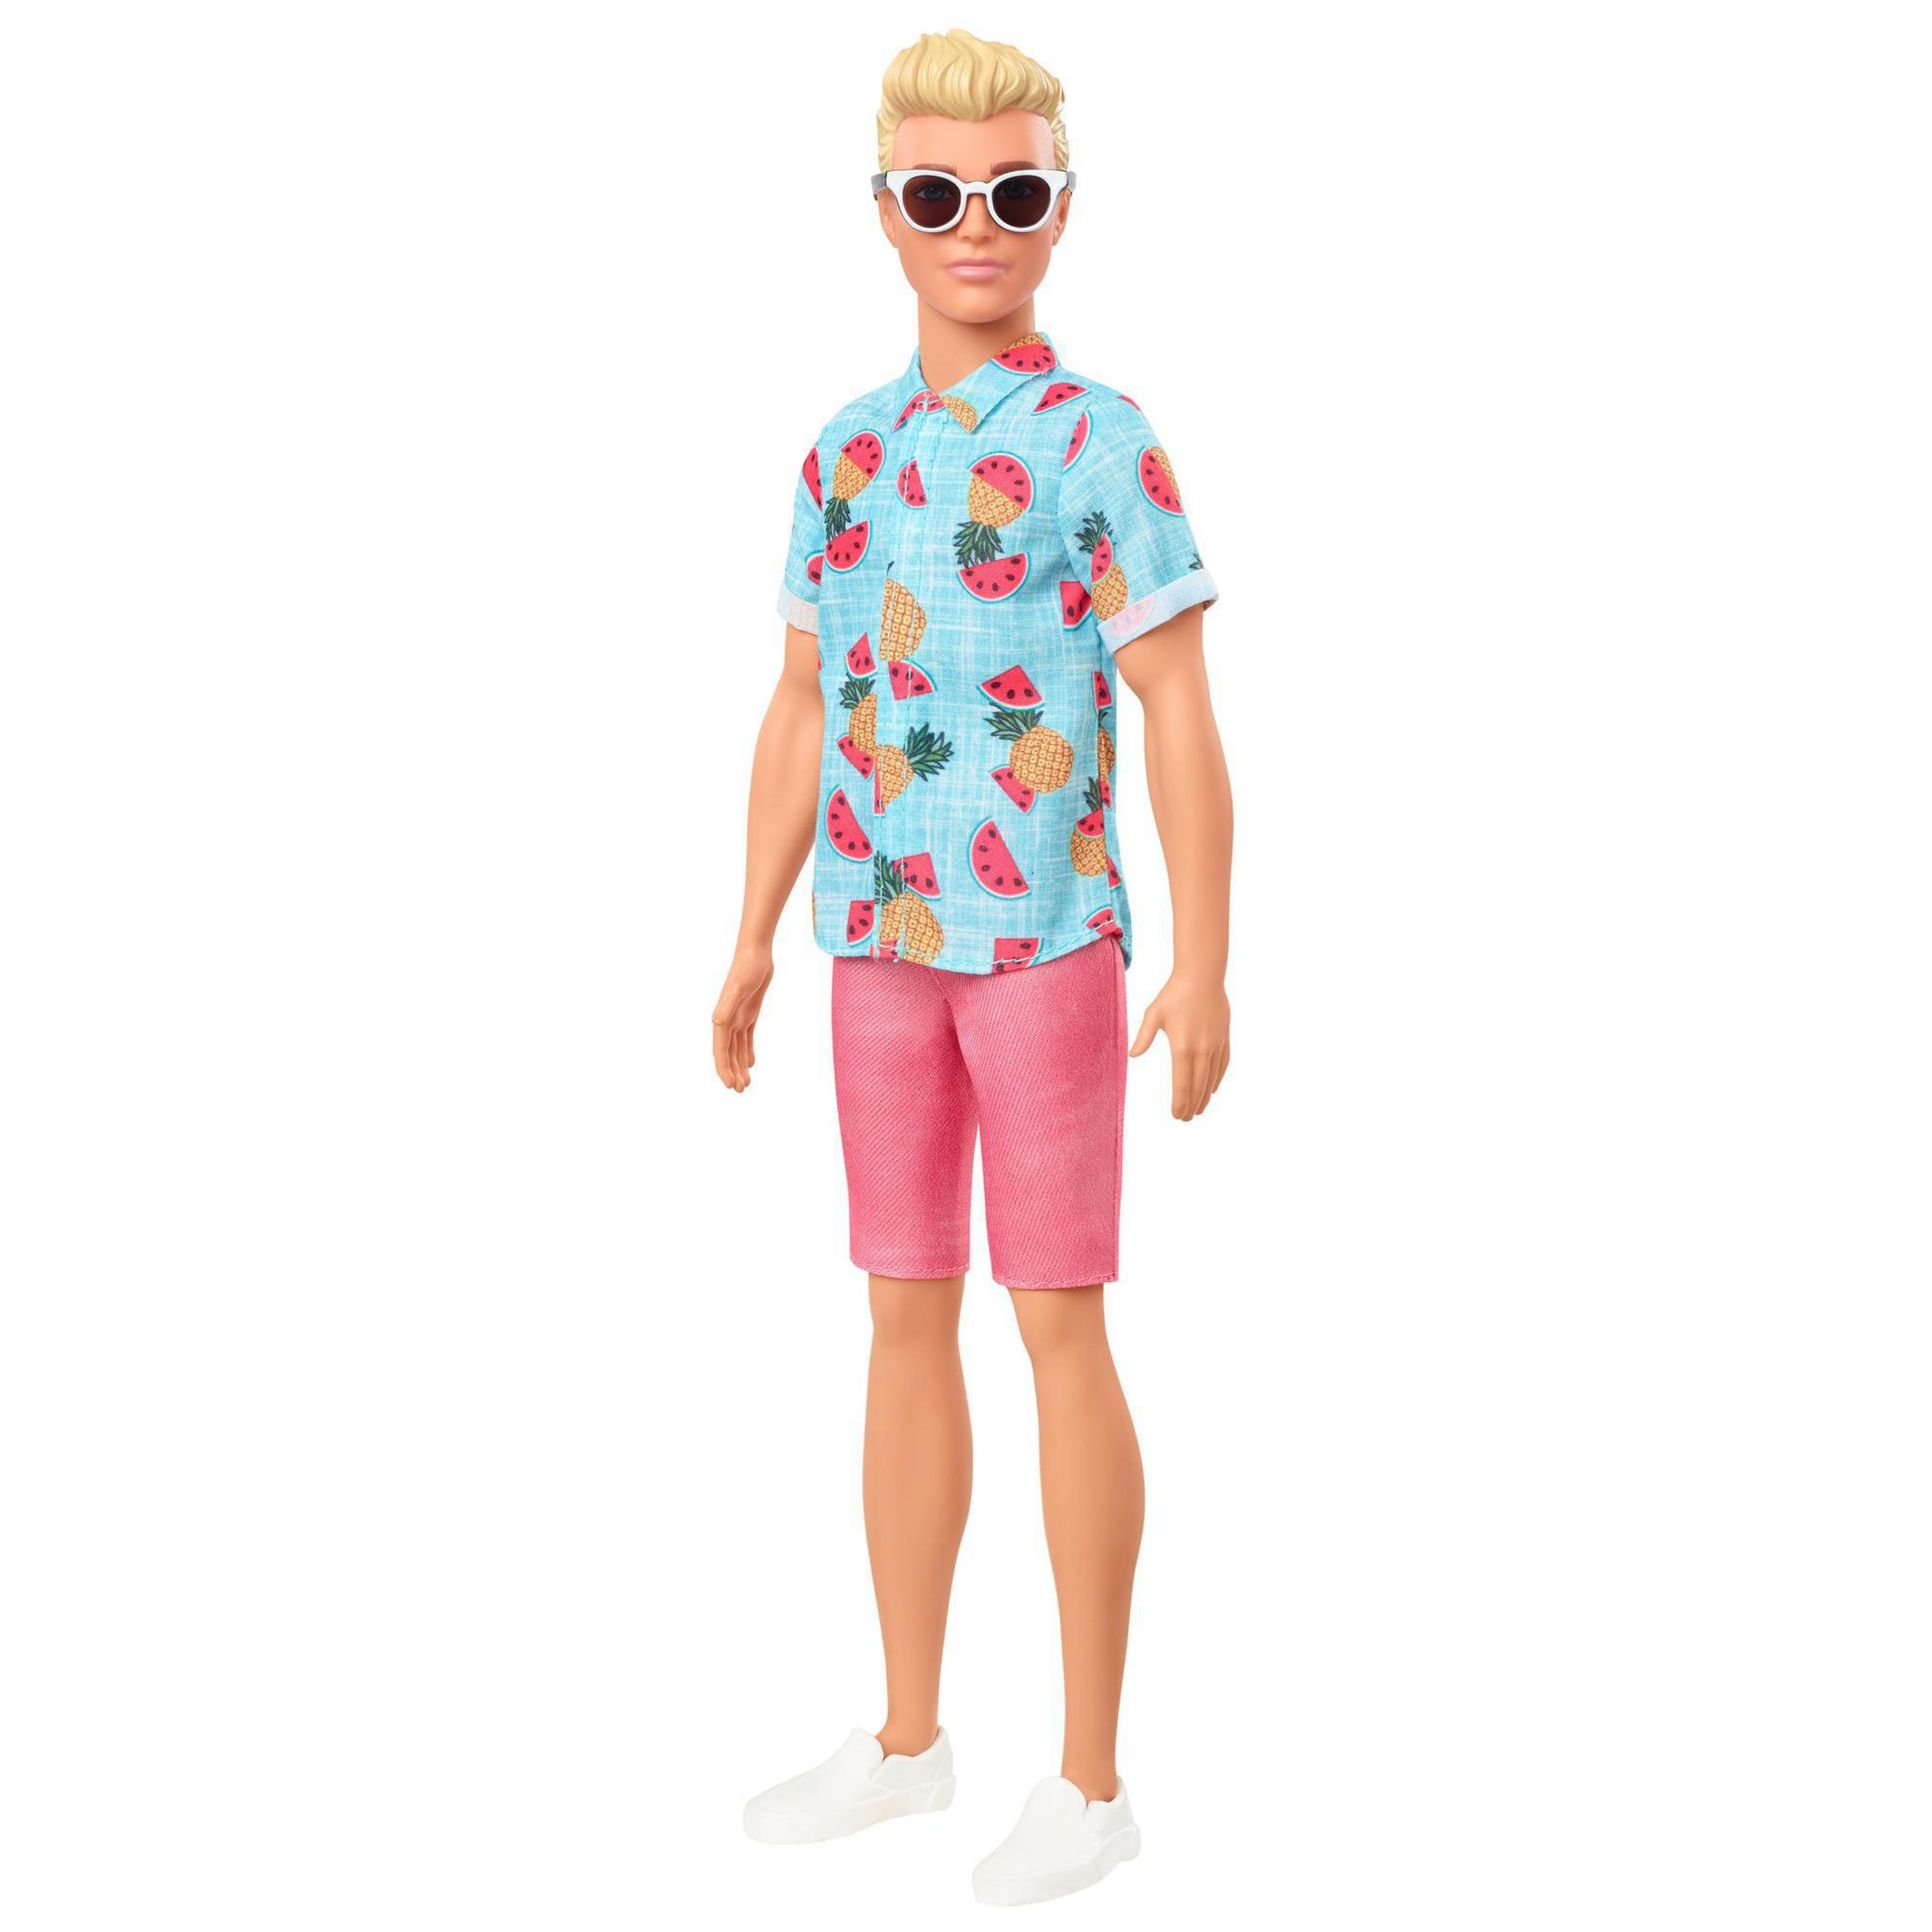 GRB04 Fashionista Barbie Ken Tropical MATTEL Spielzeugpuppe